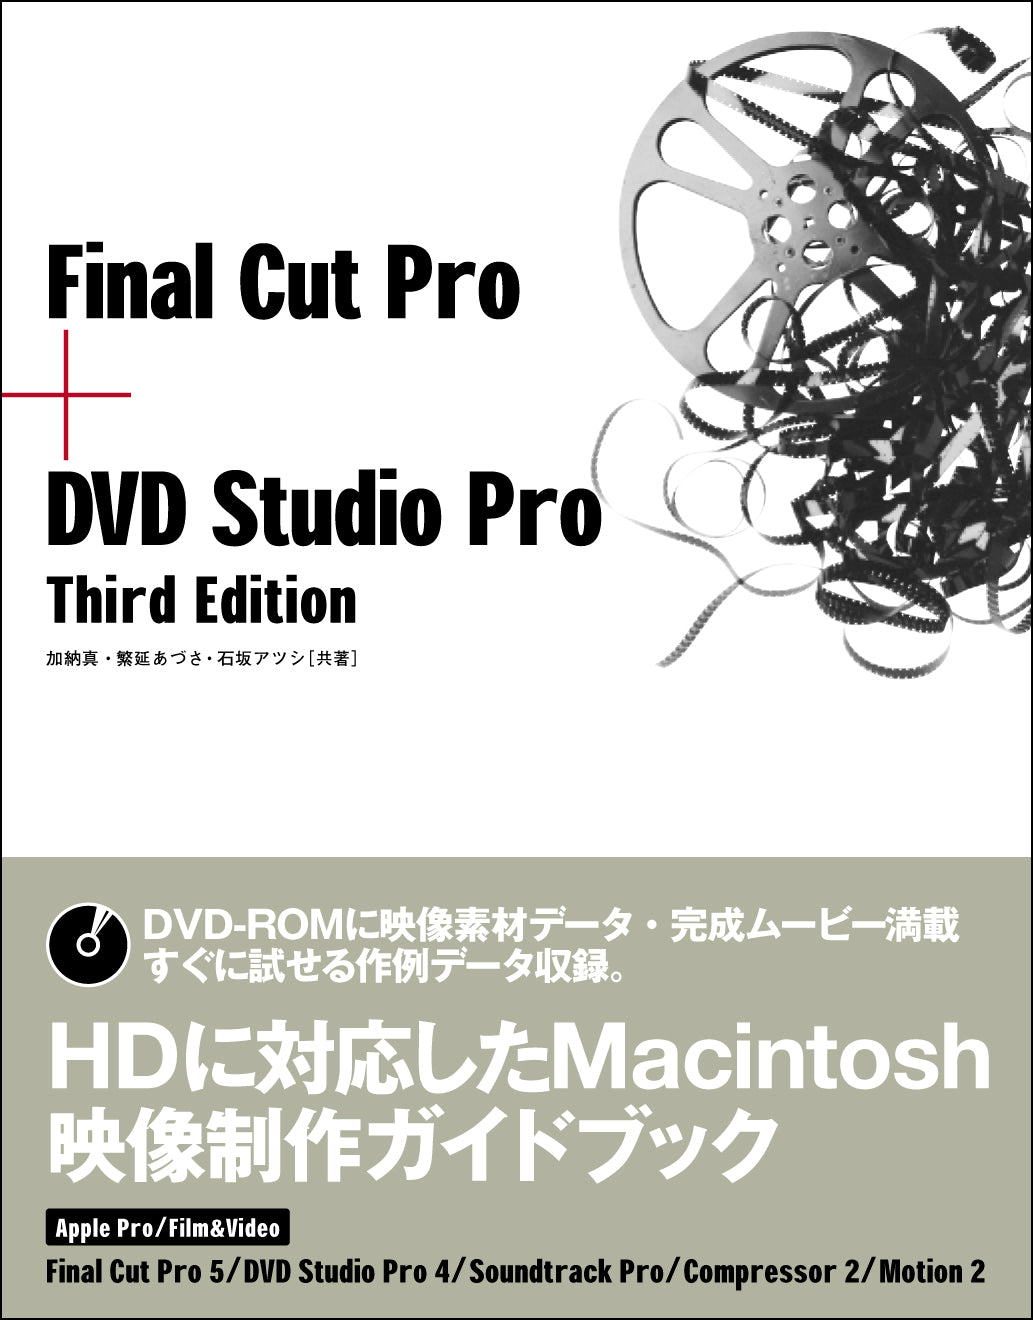 Final Cut Pro + DVD Studio Pro Third Edition | 株式会社ビー・エヌ